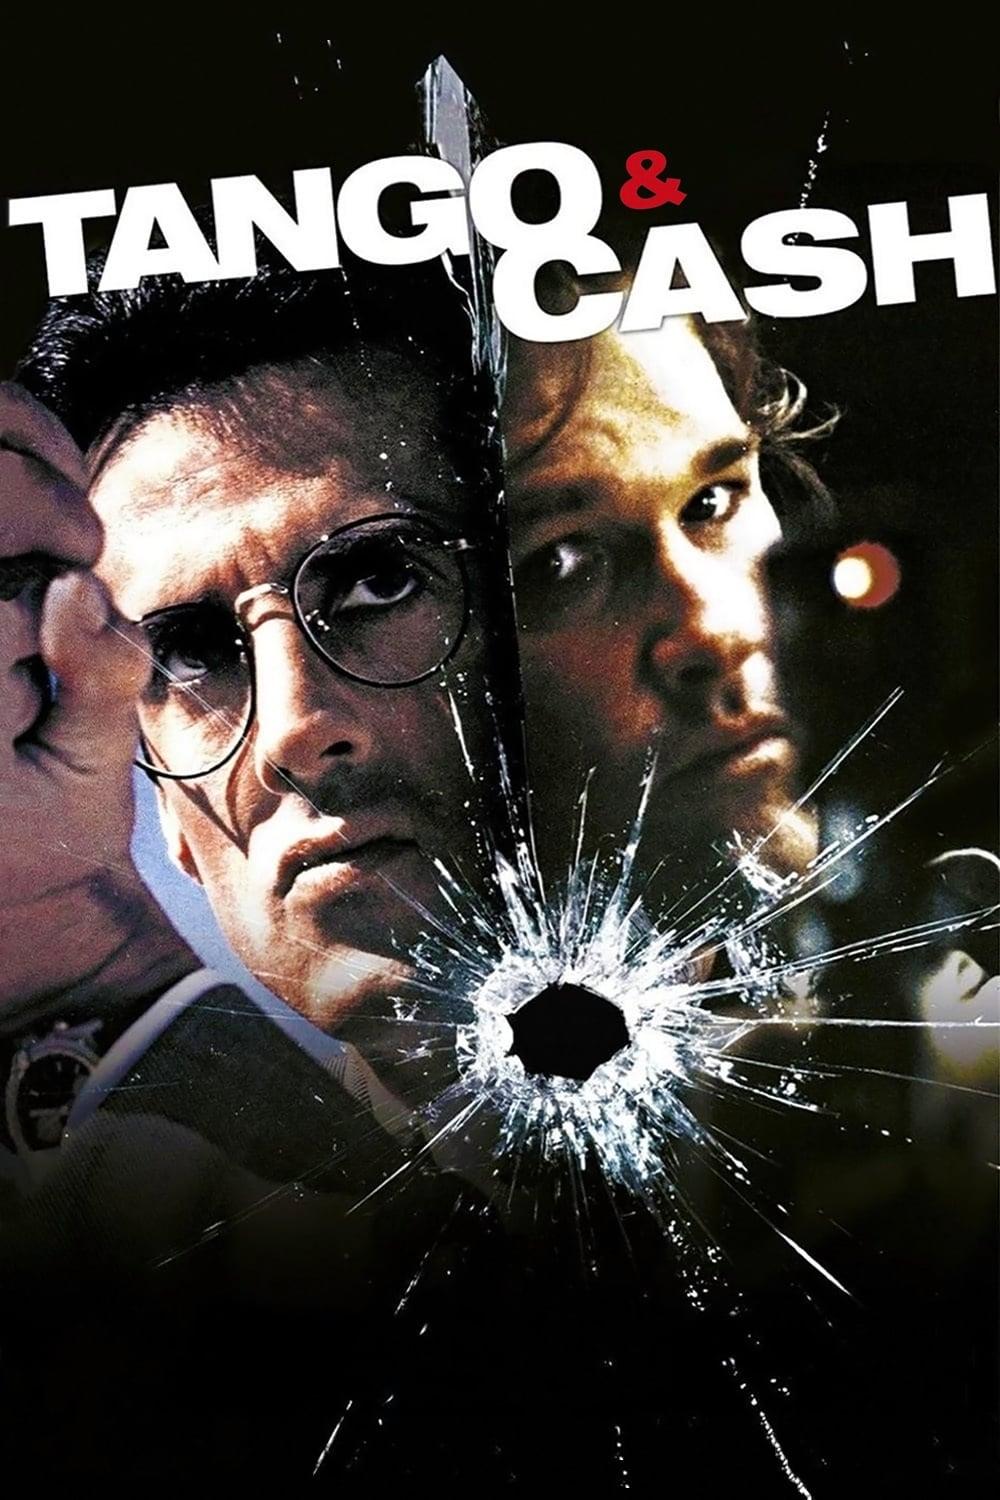 Tango & Cash poster